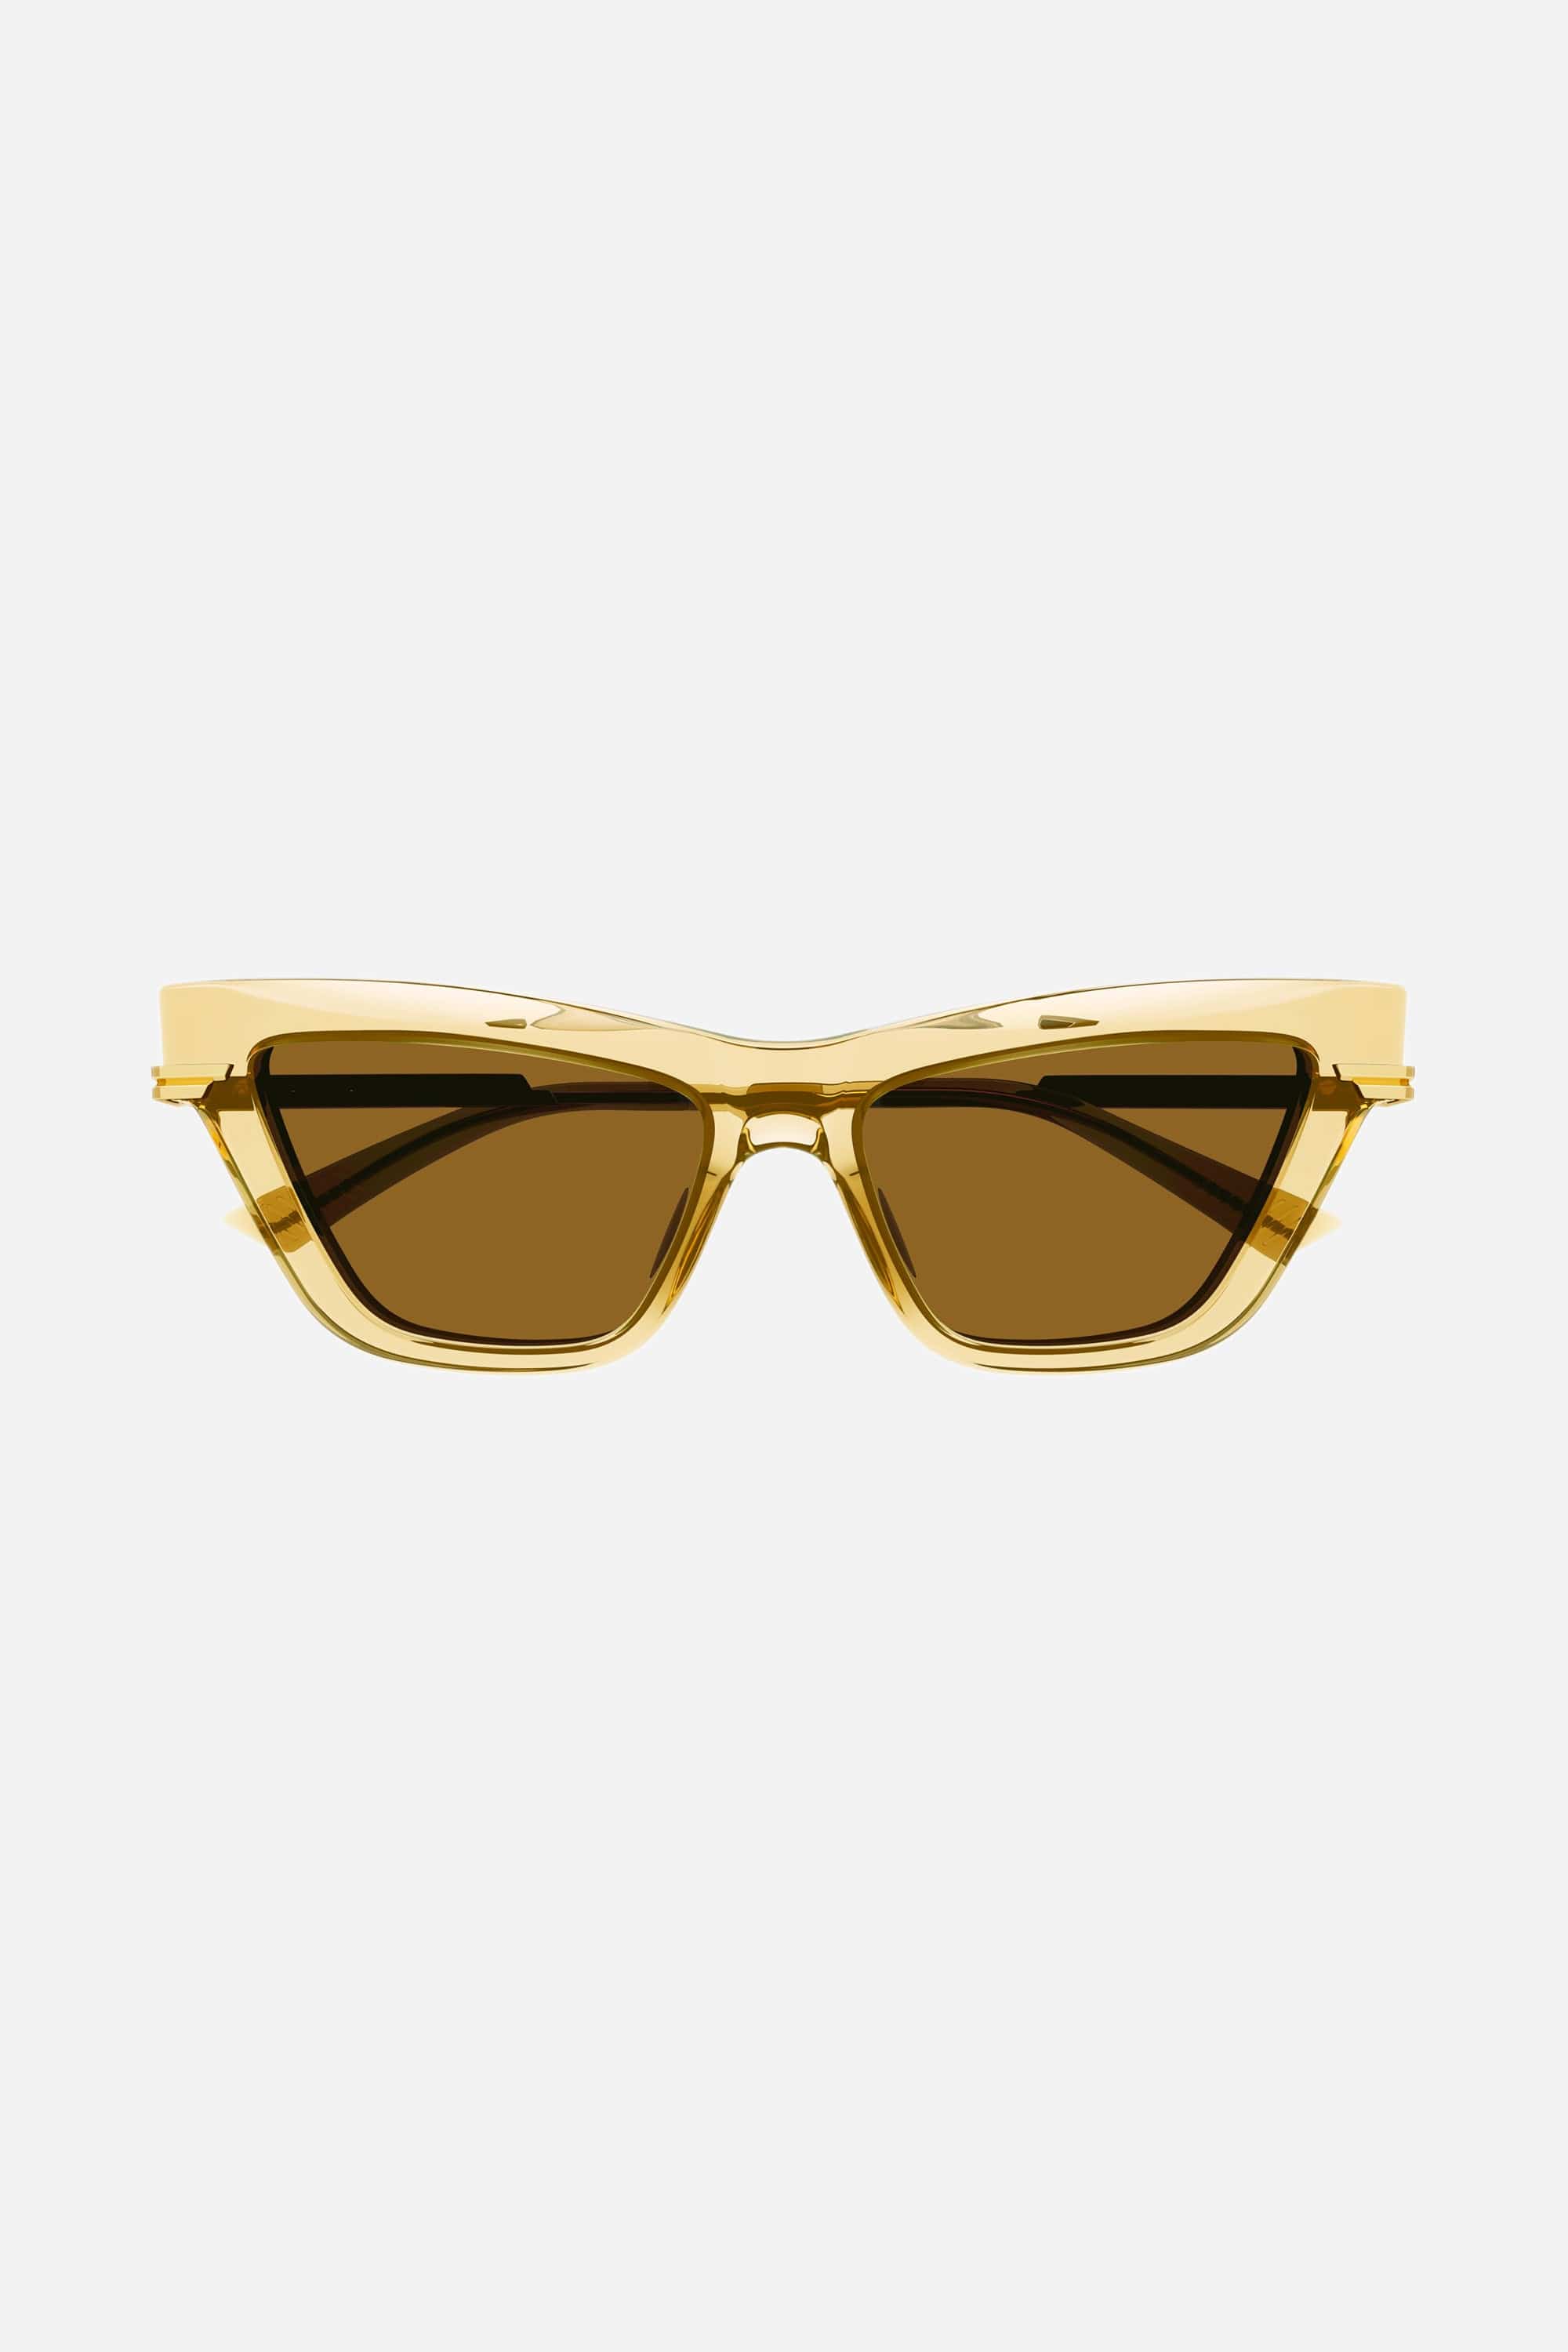 Bottega Veneta bold crystal yellow cat eye sunglasses - Eyewear Club